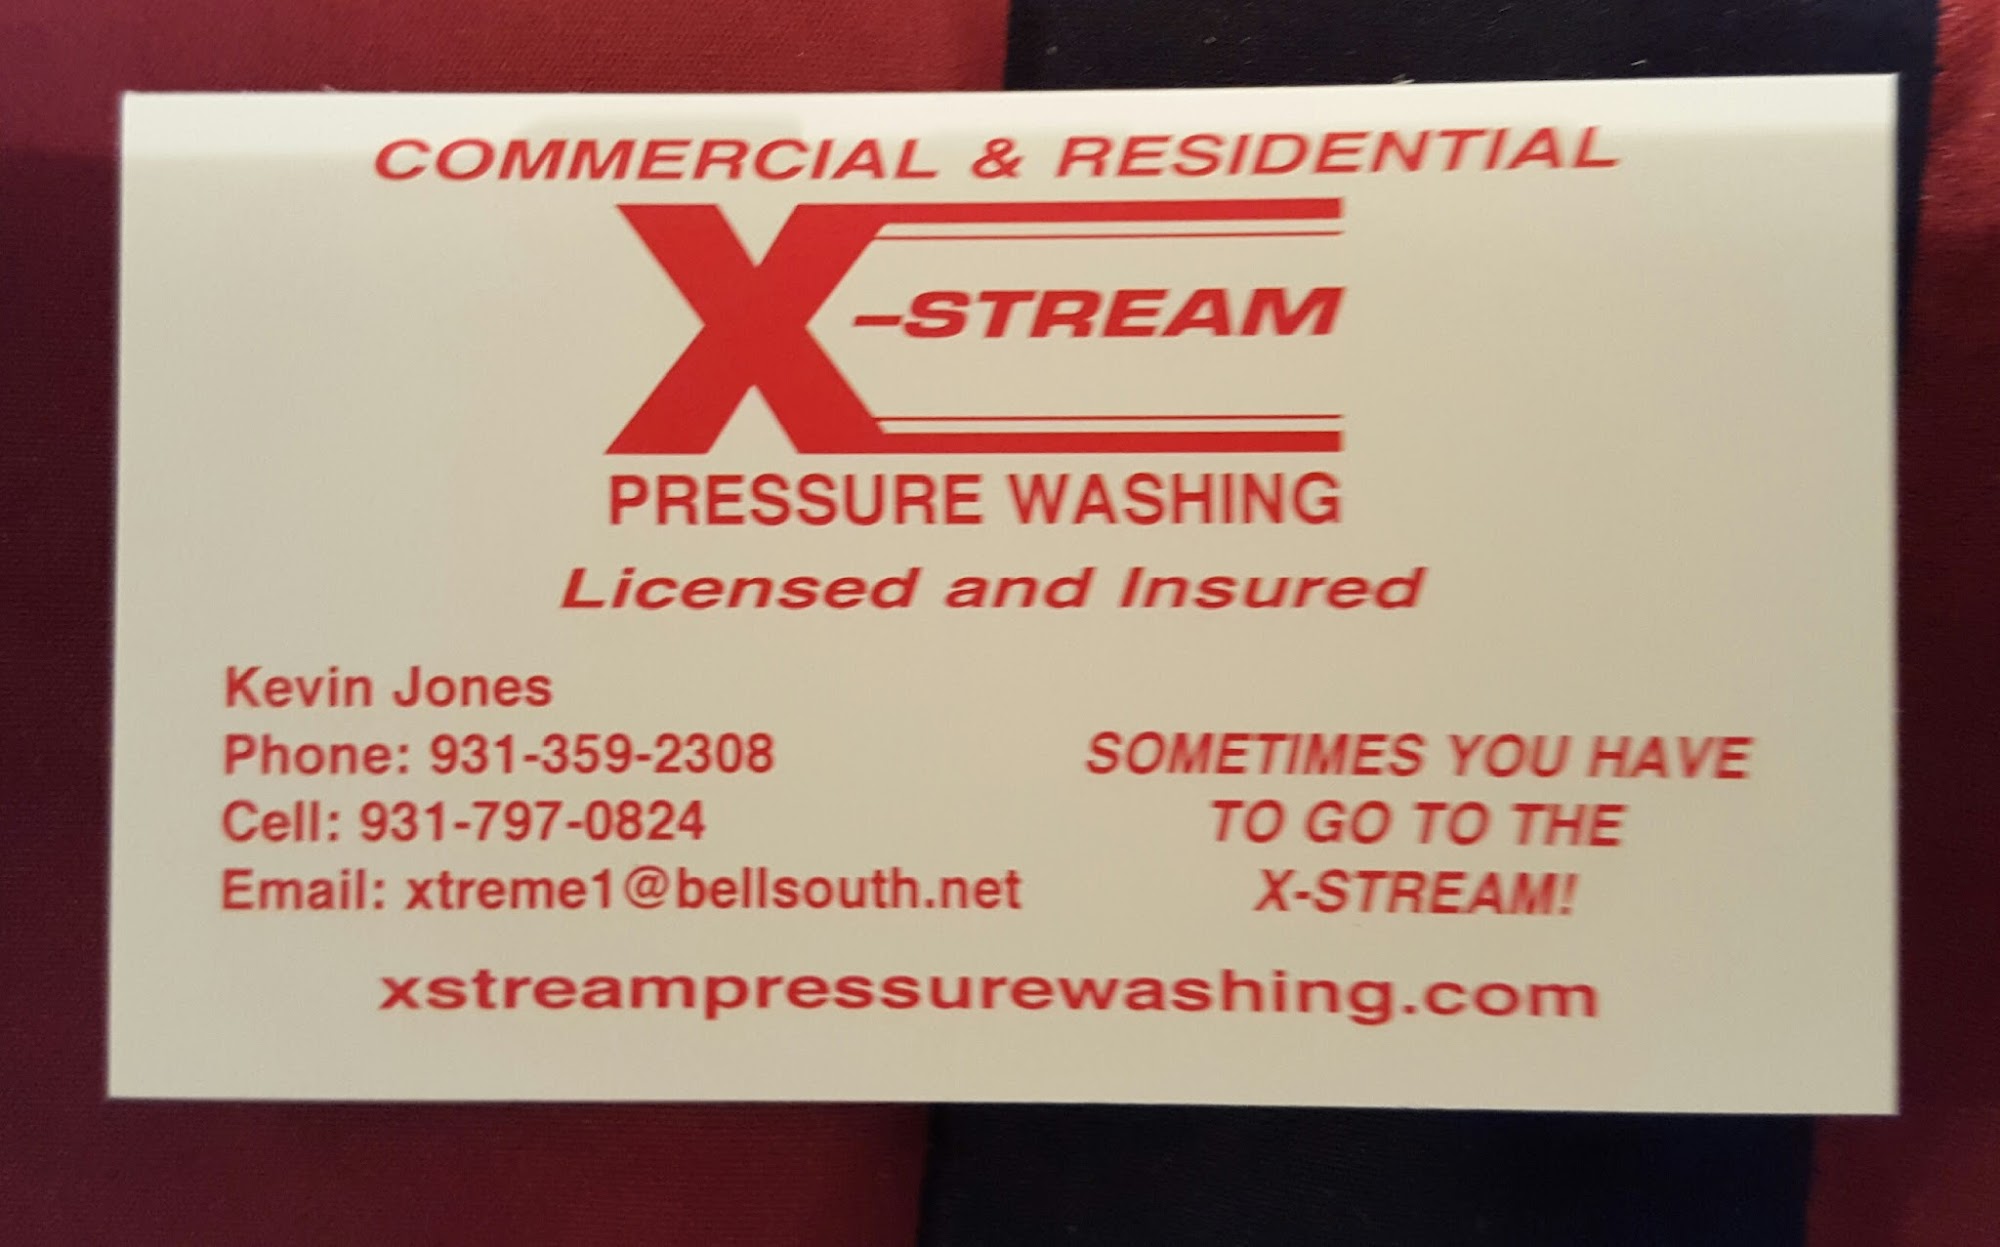 X-Stream Pressure Washing 611 Jackson Ave, Lewisburg Tennessee 37091